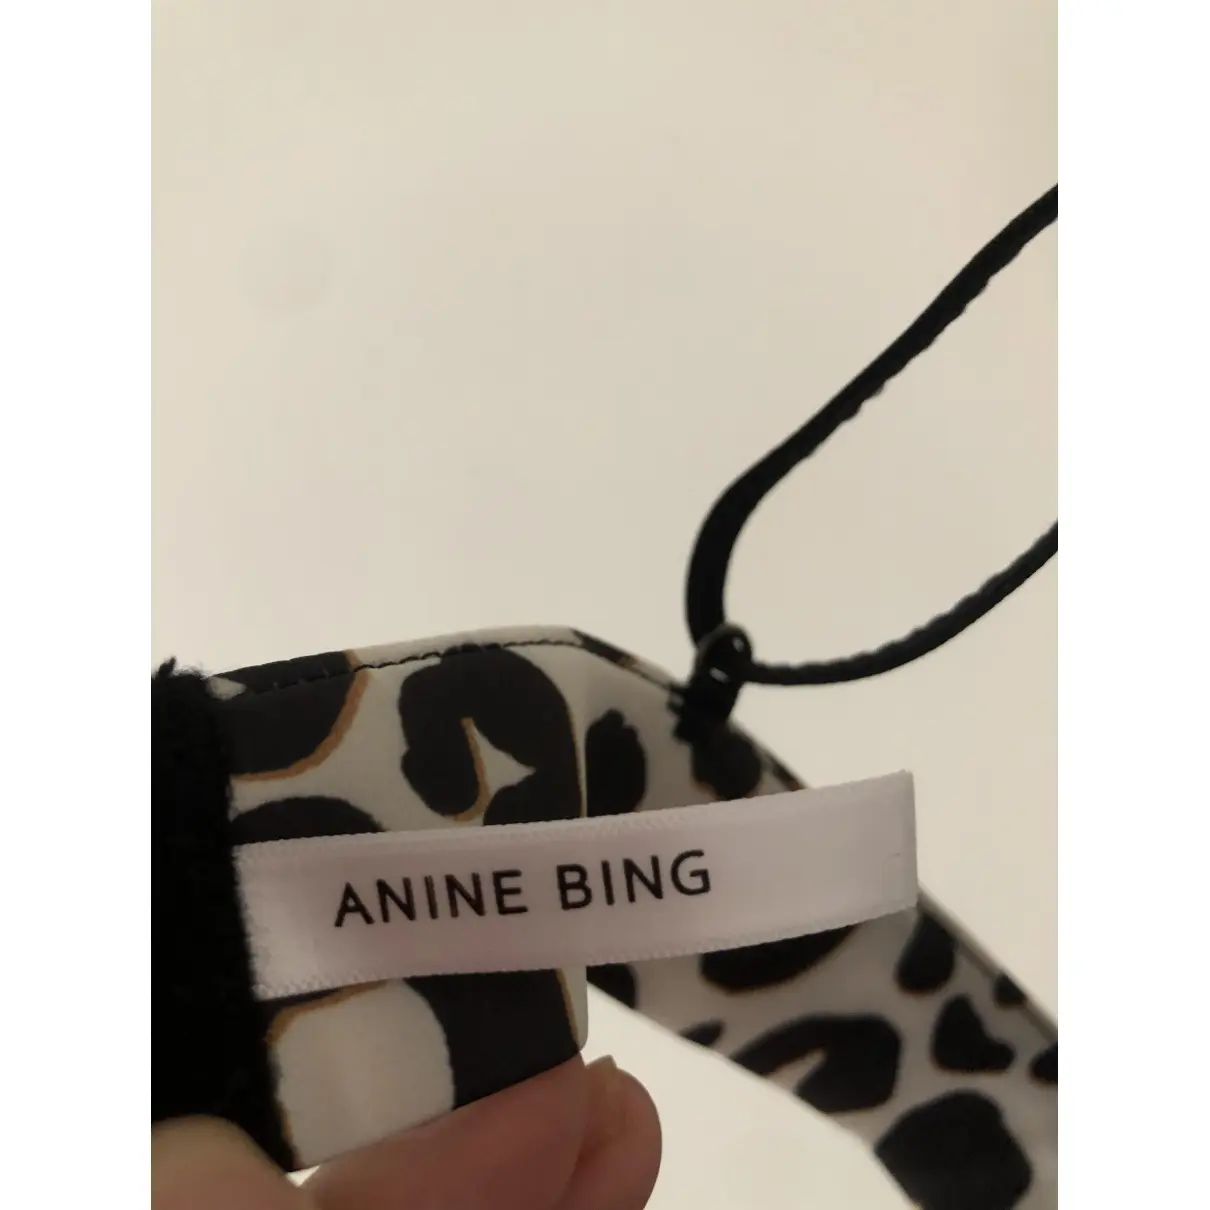 Anine Bing Fall Winter 2019 bra for sale